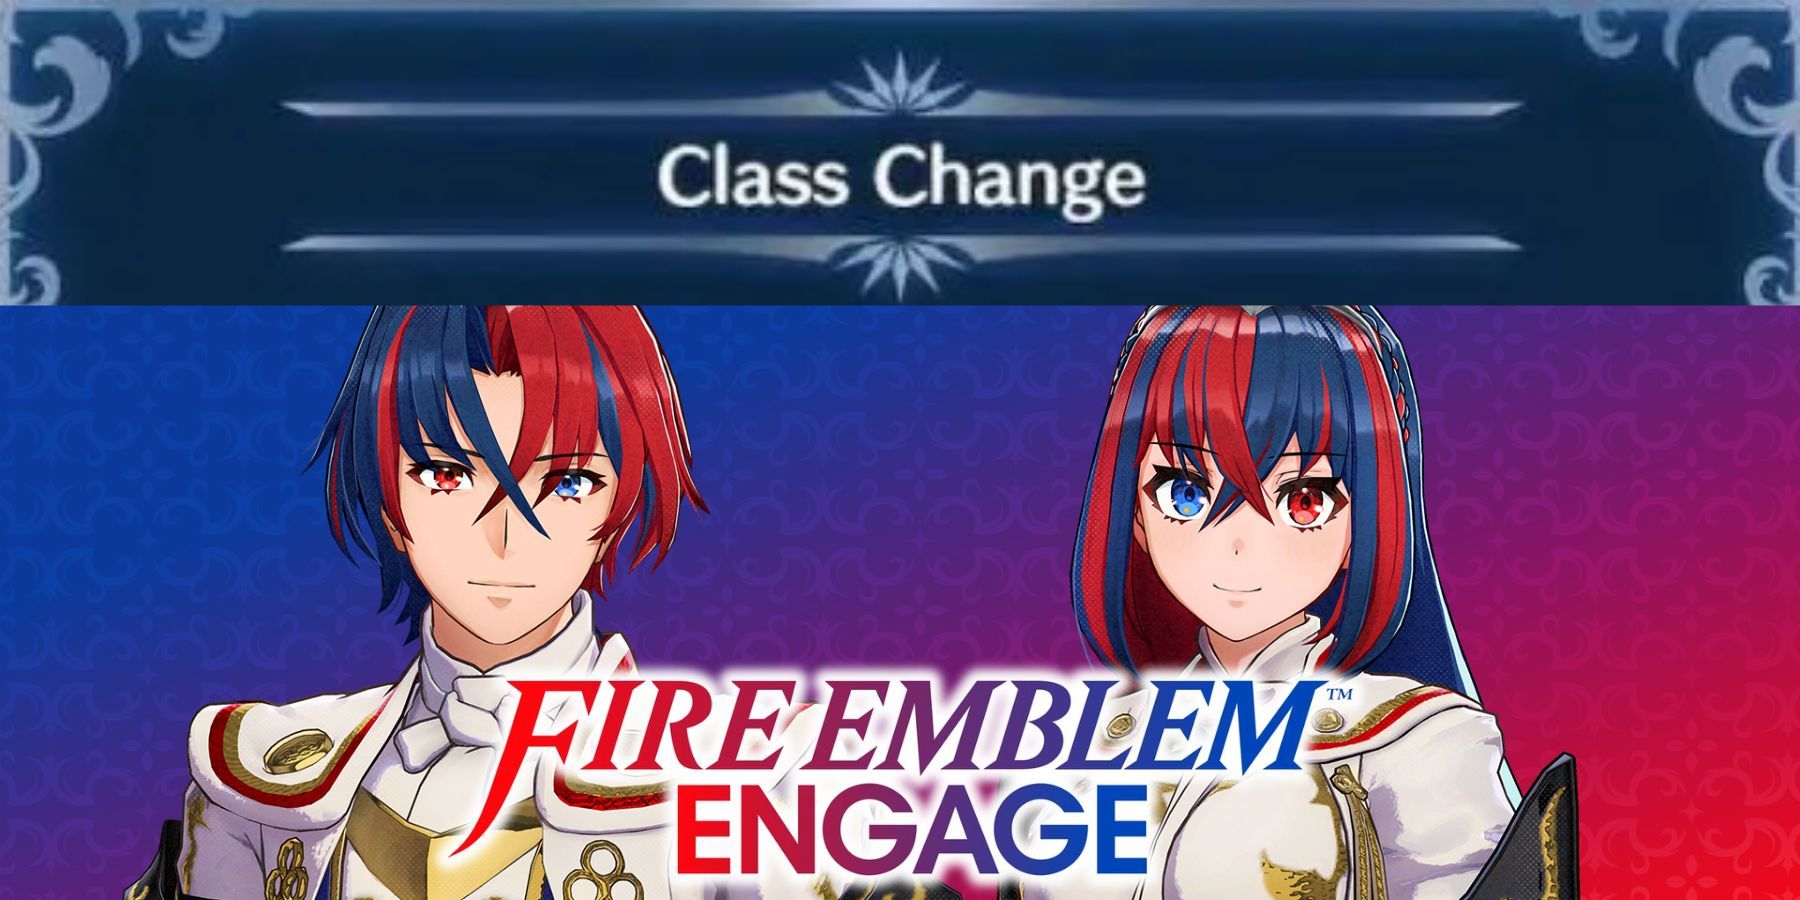 fire emblem engage class change logo main characters